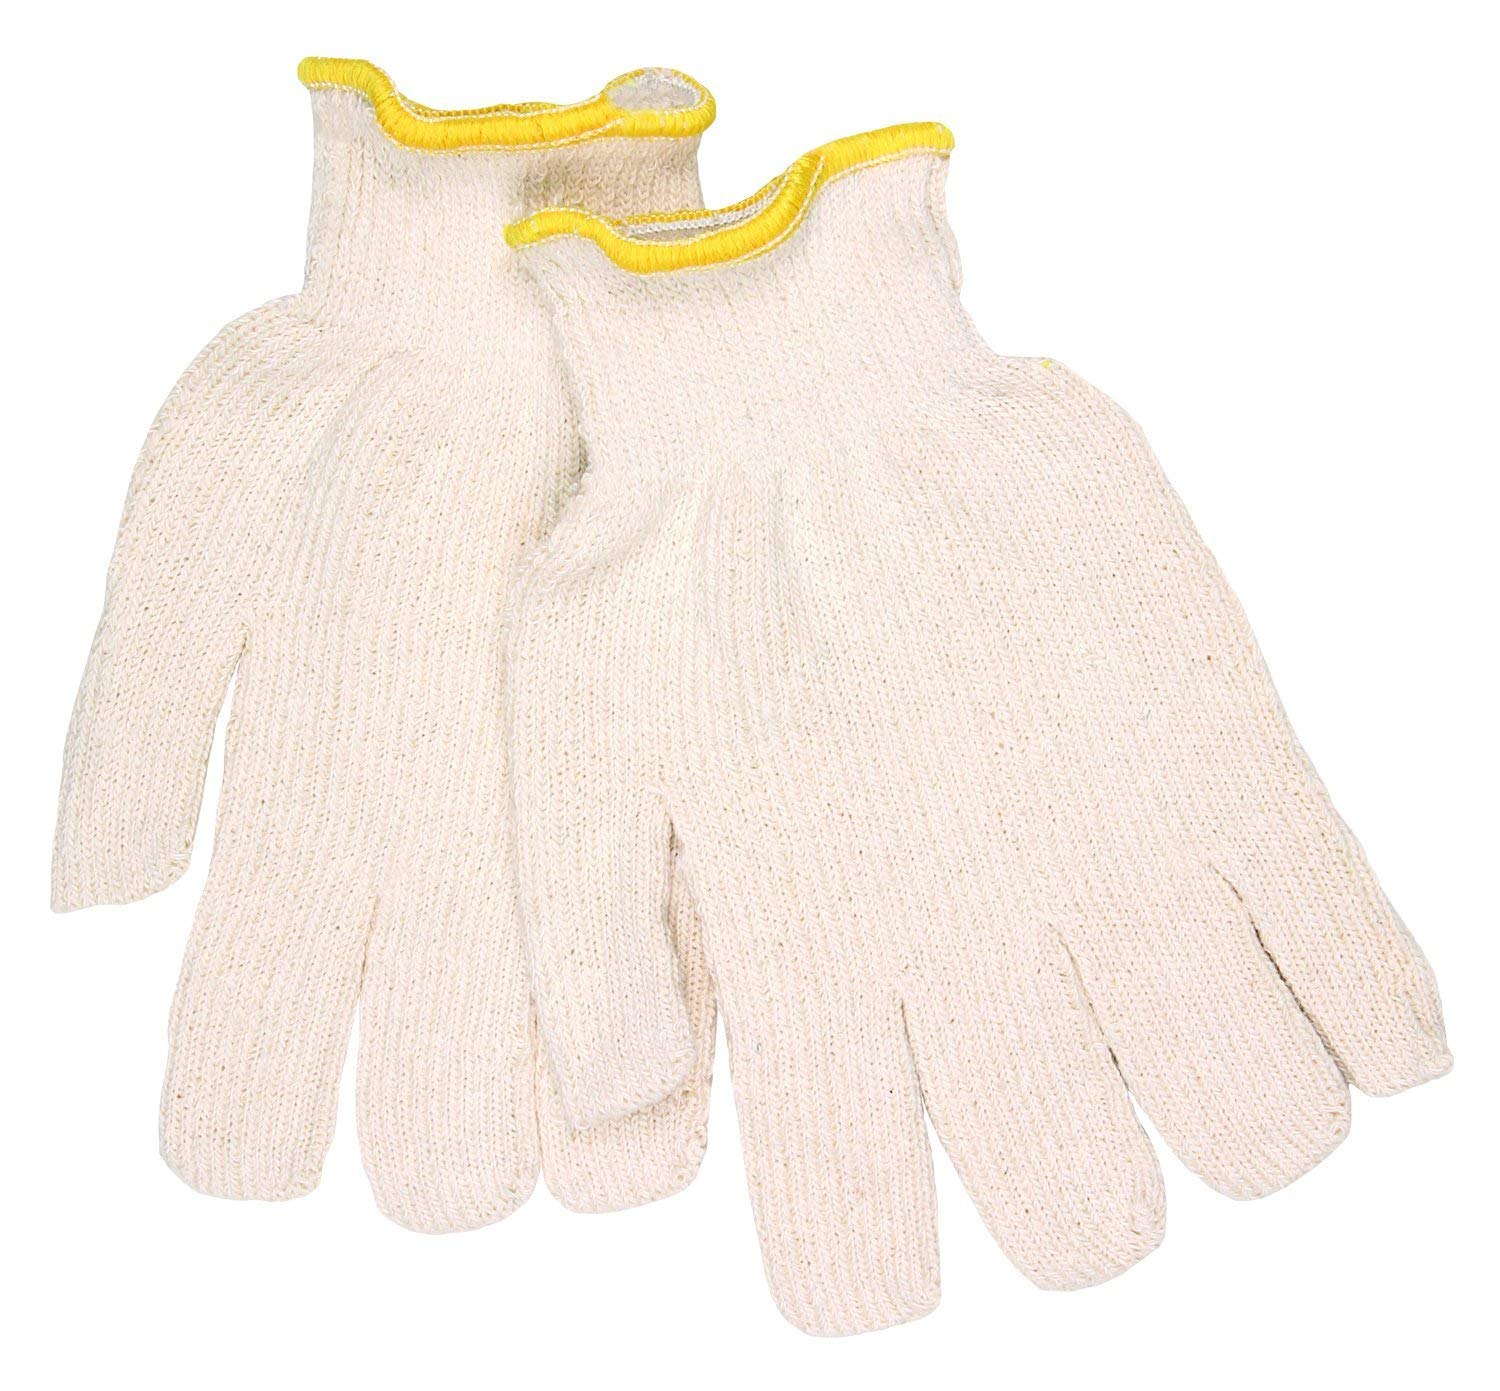 Terry Cloth Work Gloves